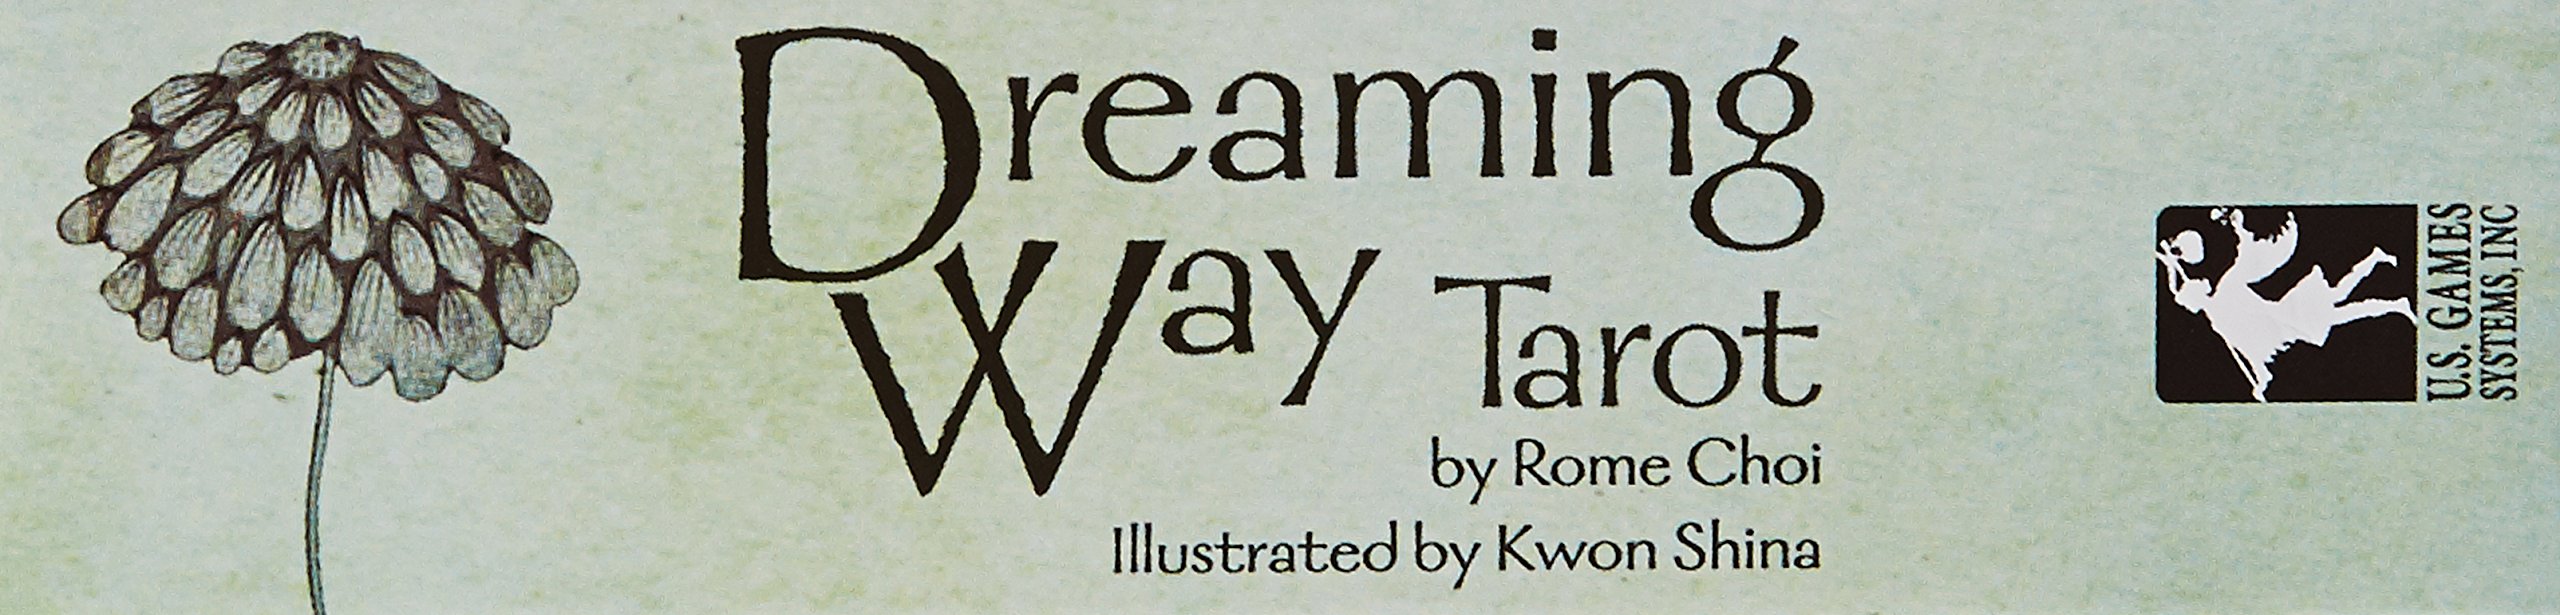 Dreaming Way Tarot – Rome Choi , Kwon Shina